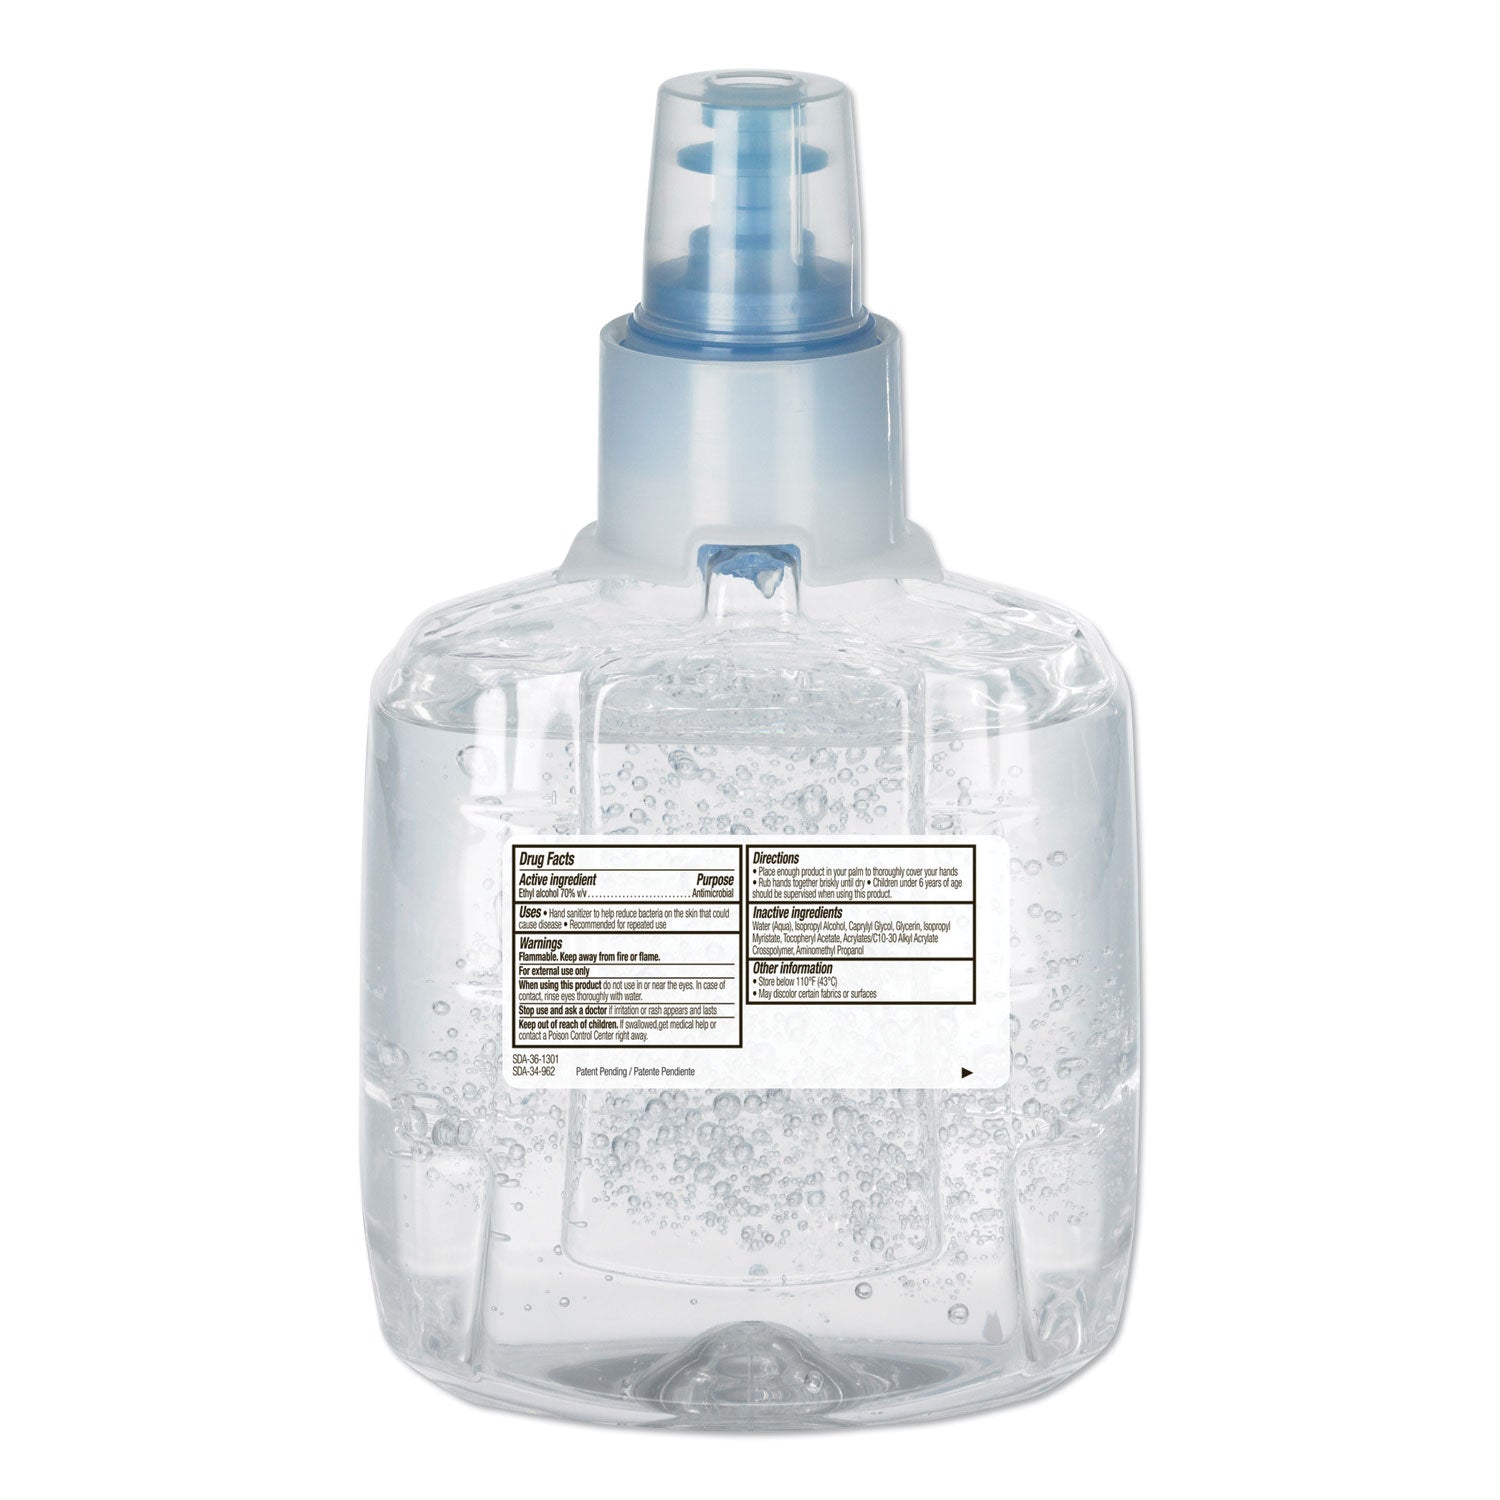 Advanced Hand Sanitizer Green Certified Gel Refill, For LTX-12 Dispensers, 1,200 mL, Fragrance-Free - 